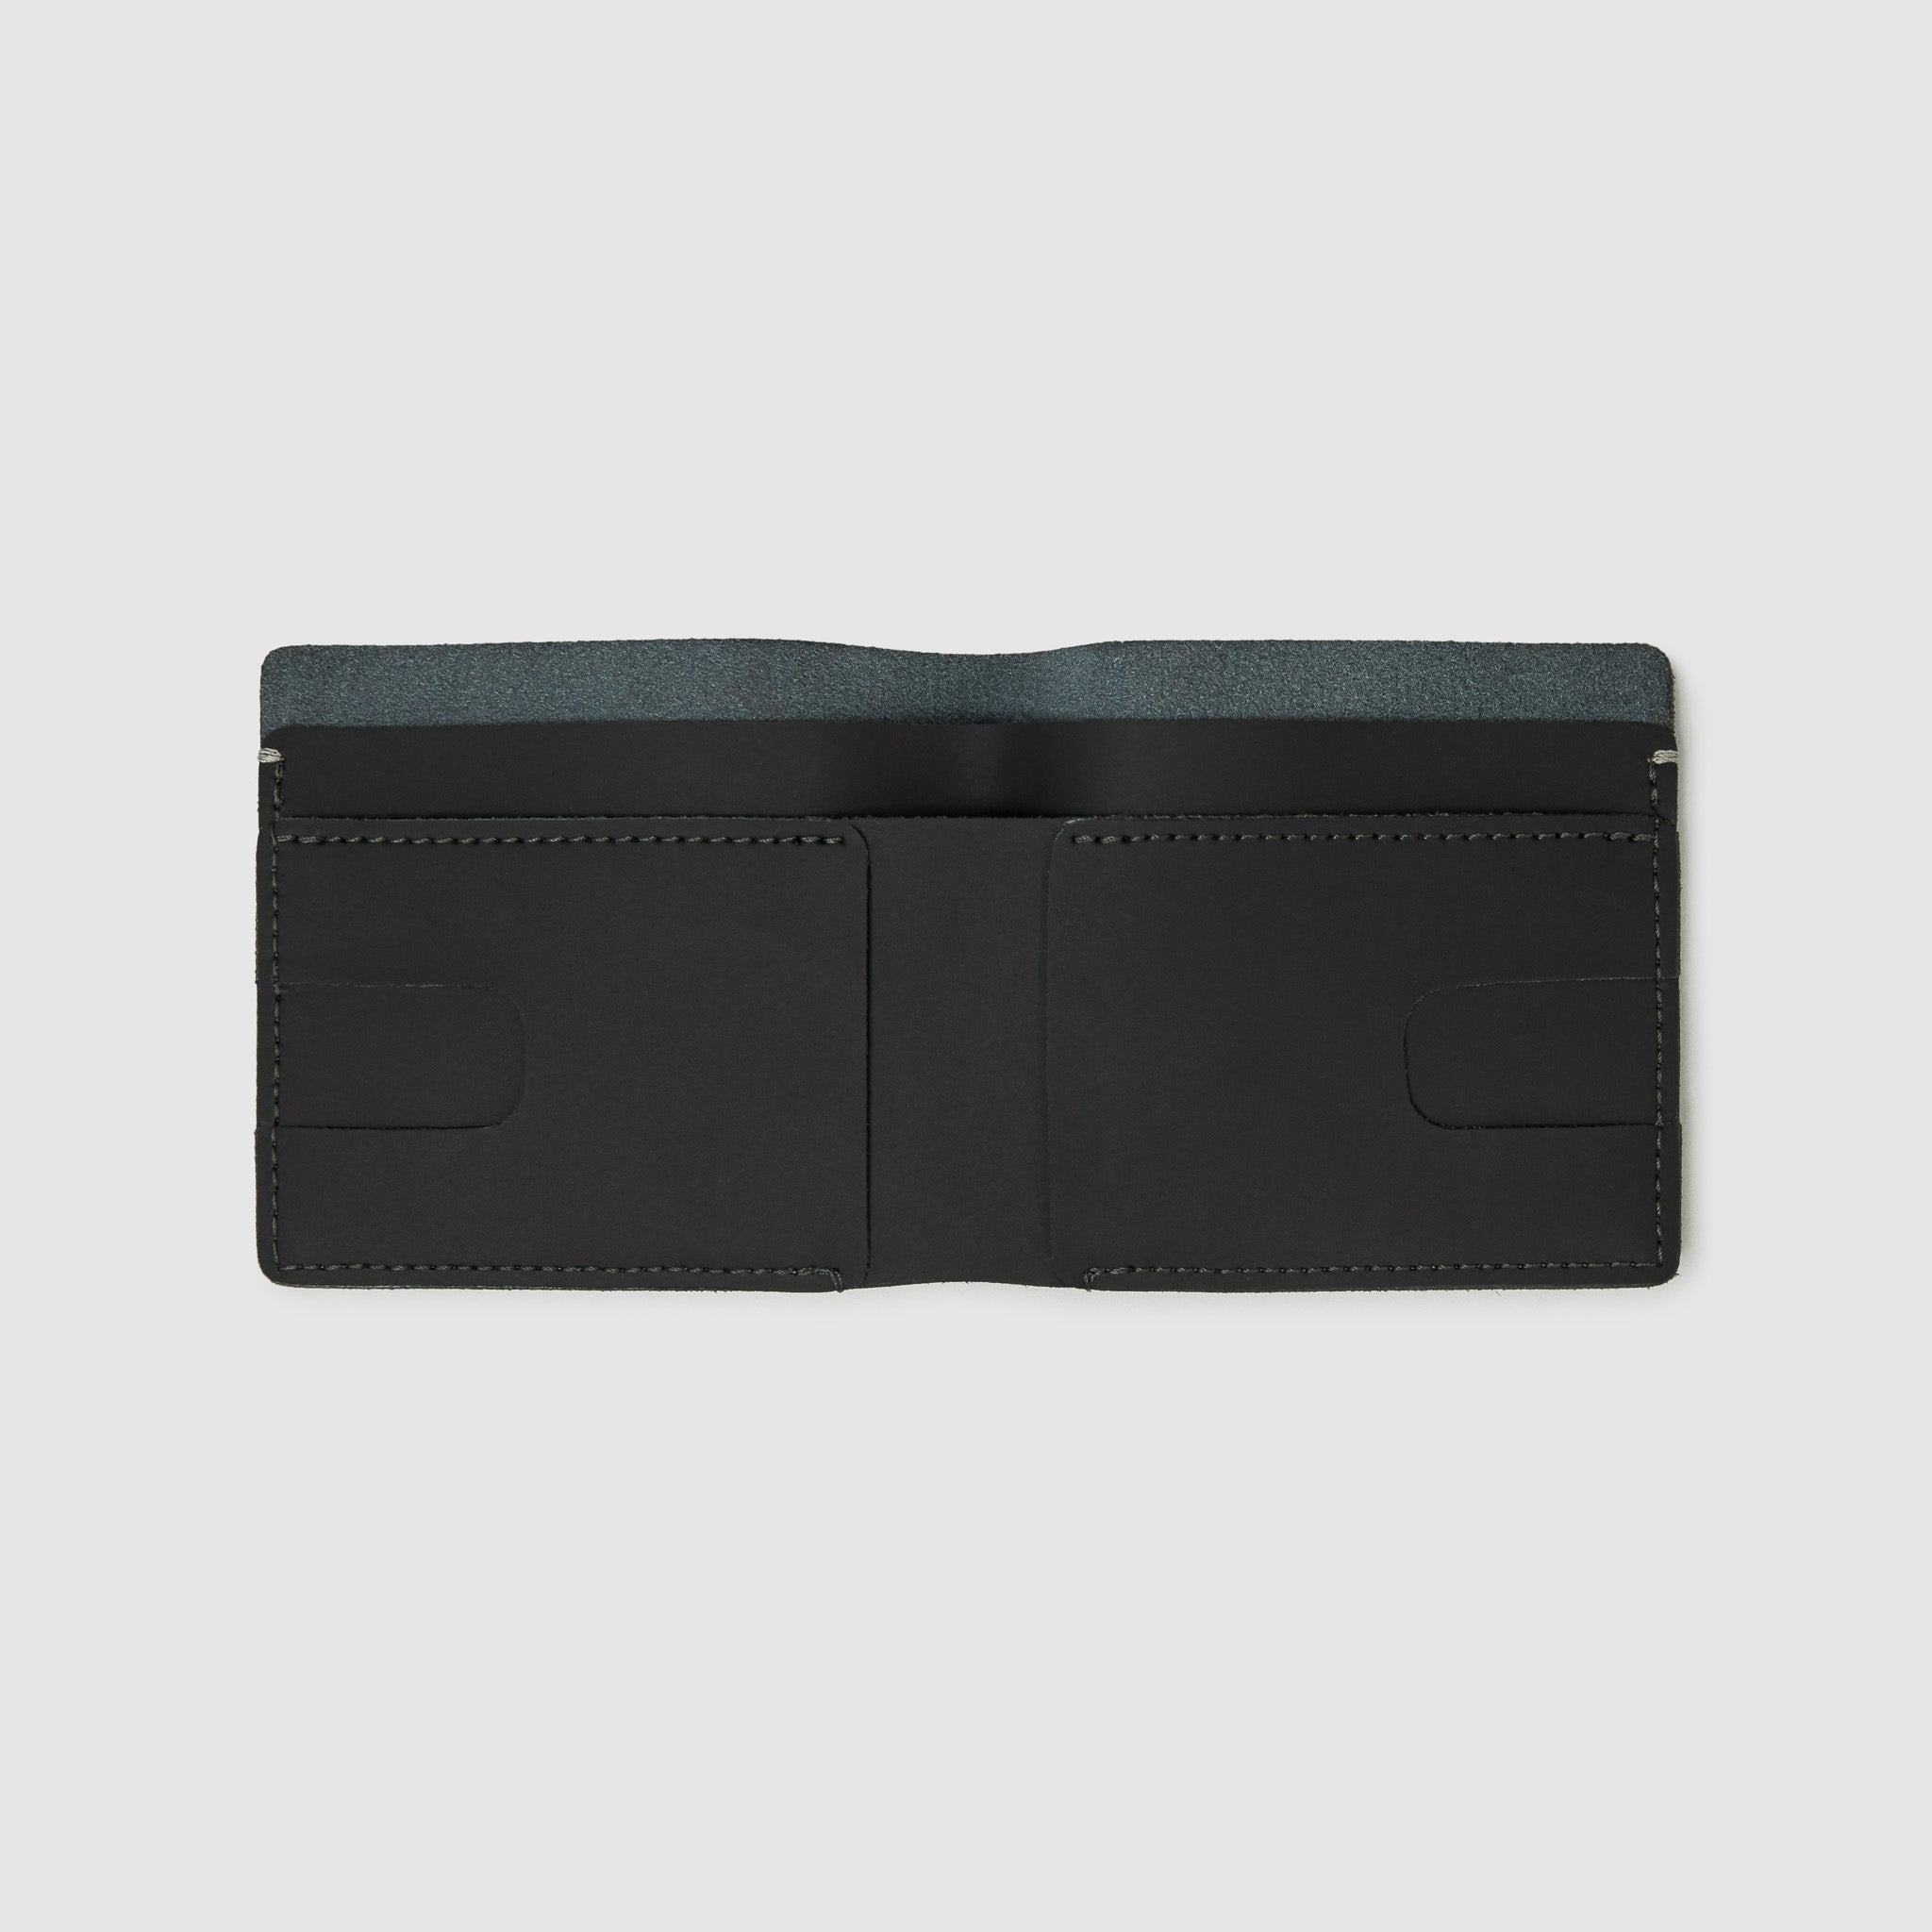 Anson Calder International Billfold Wallet RFID sport leather _sport-black